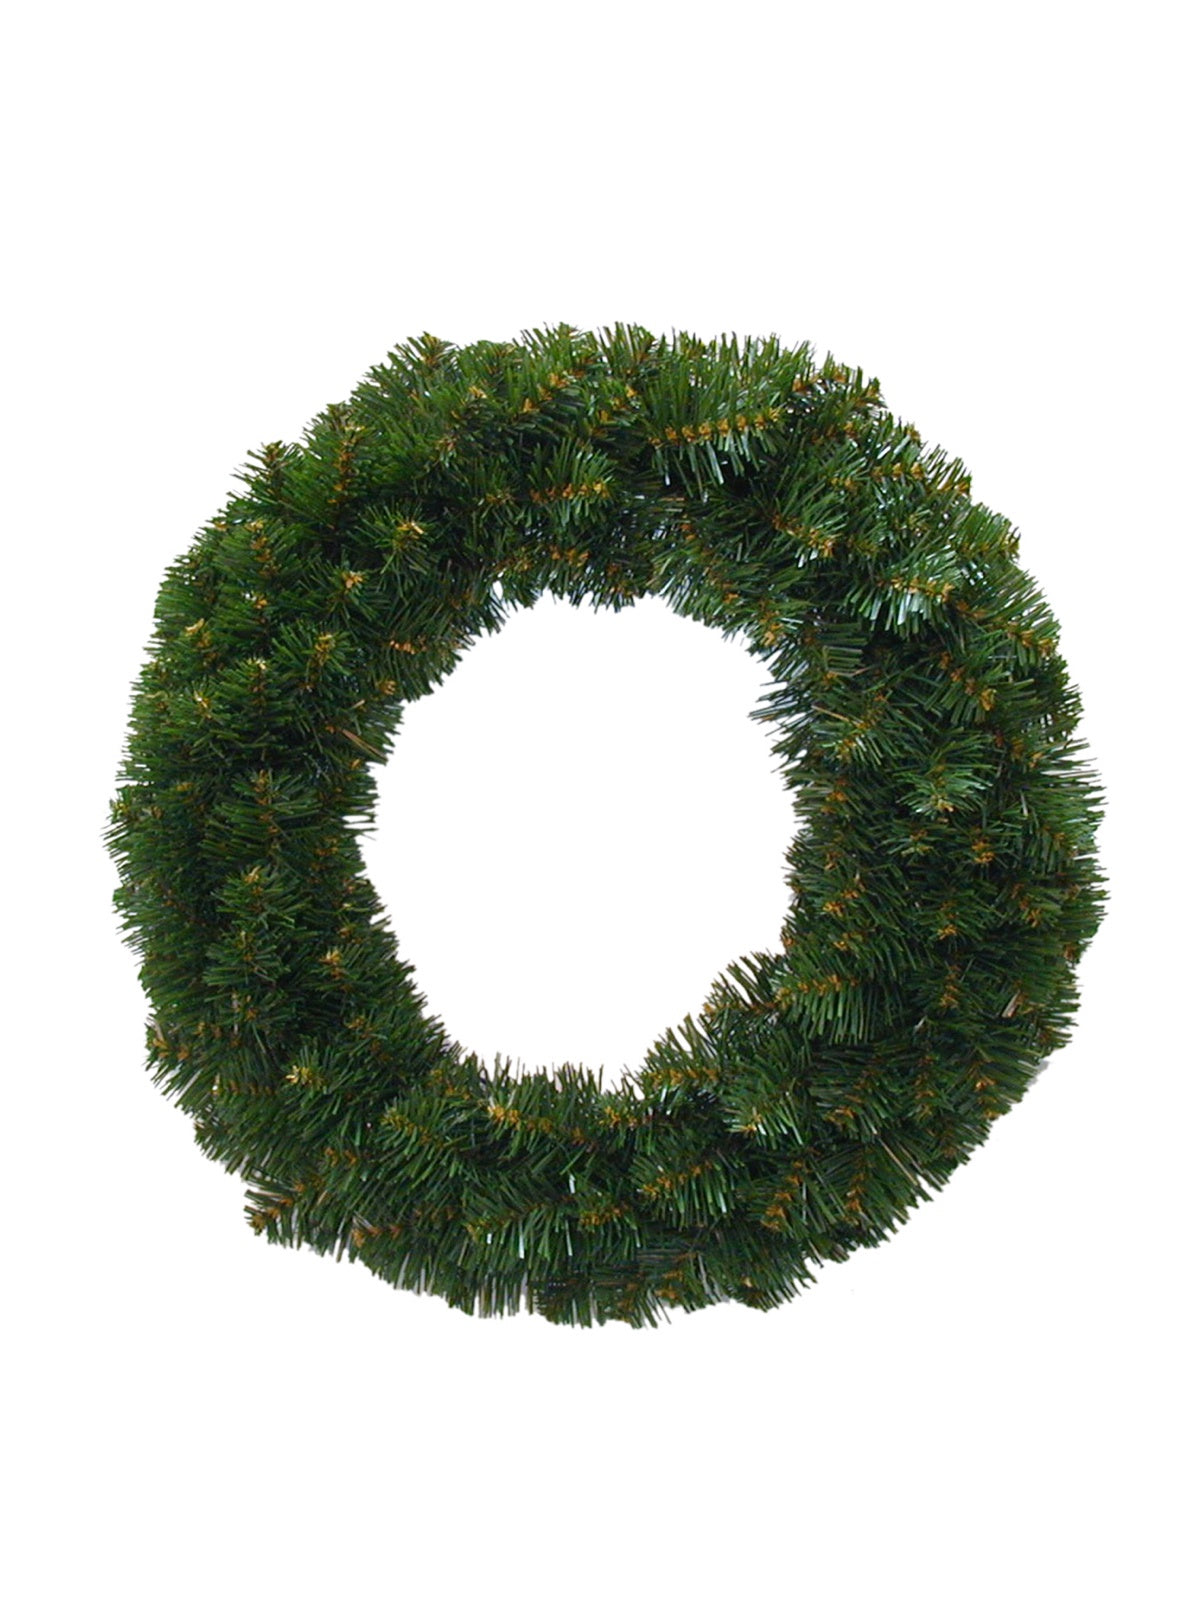 36 inch Pitch Pine Wreath 91cm